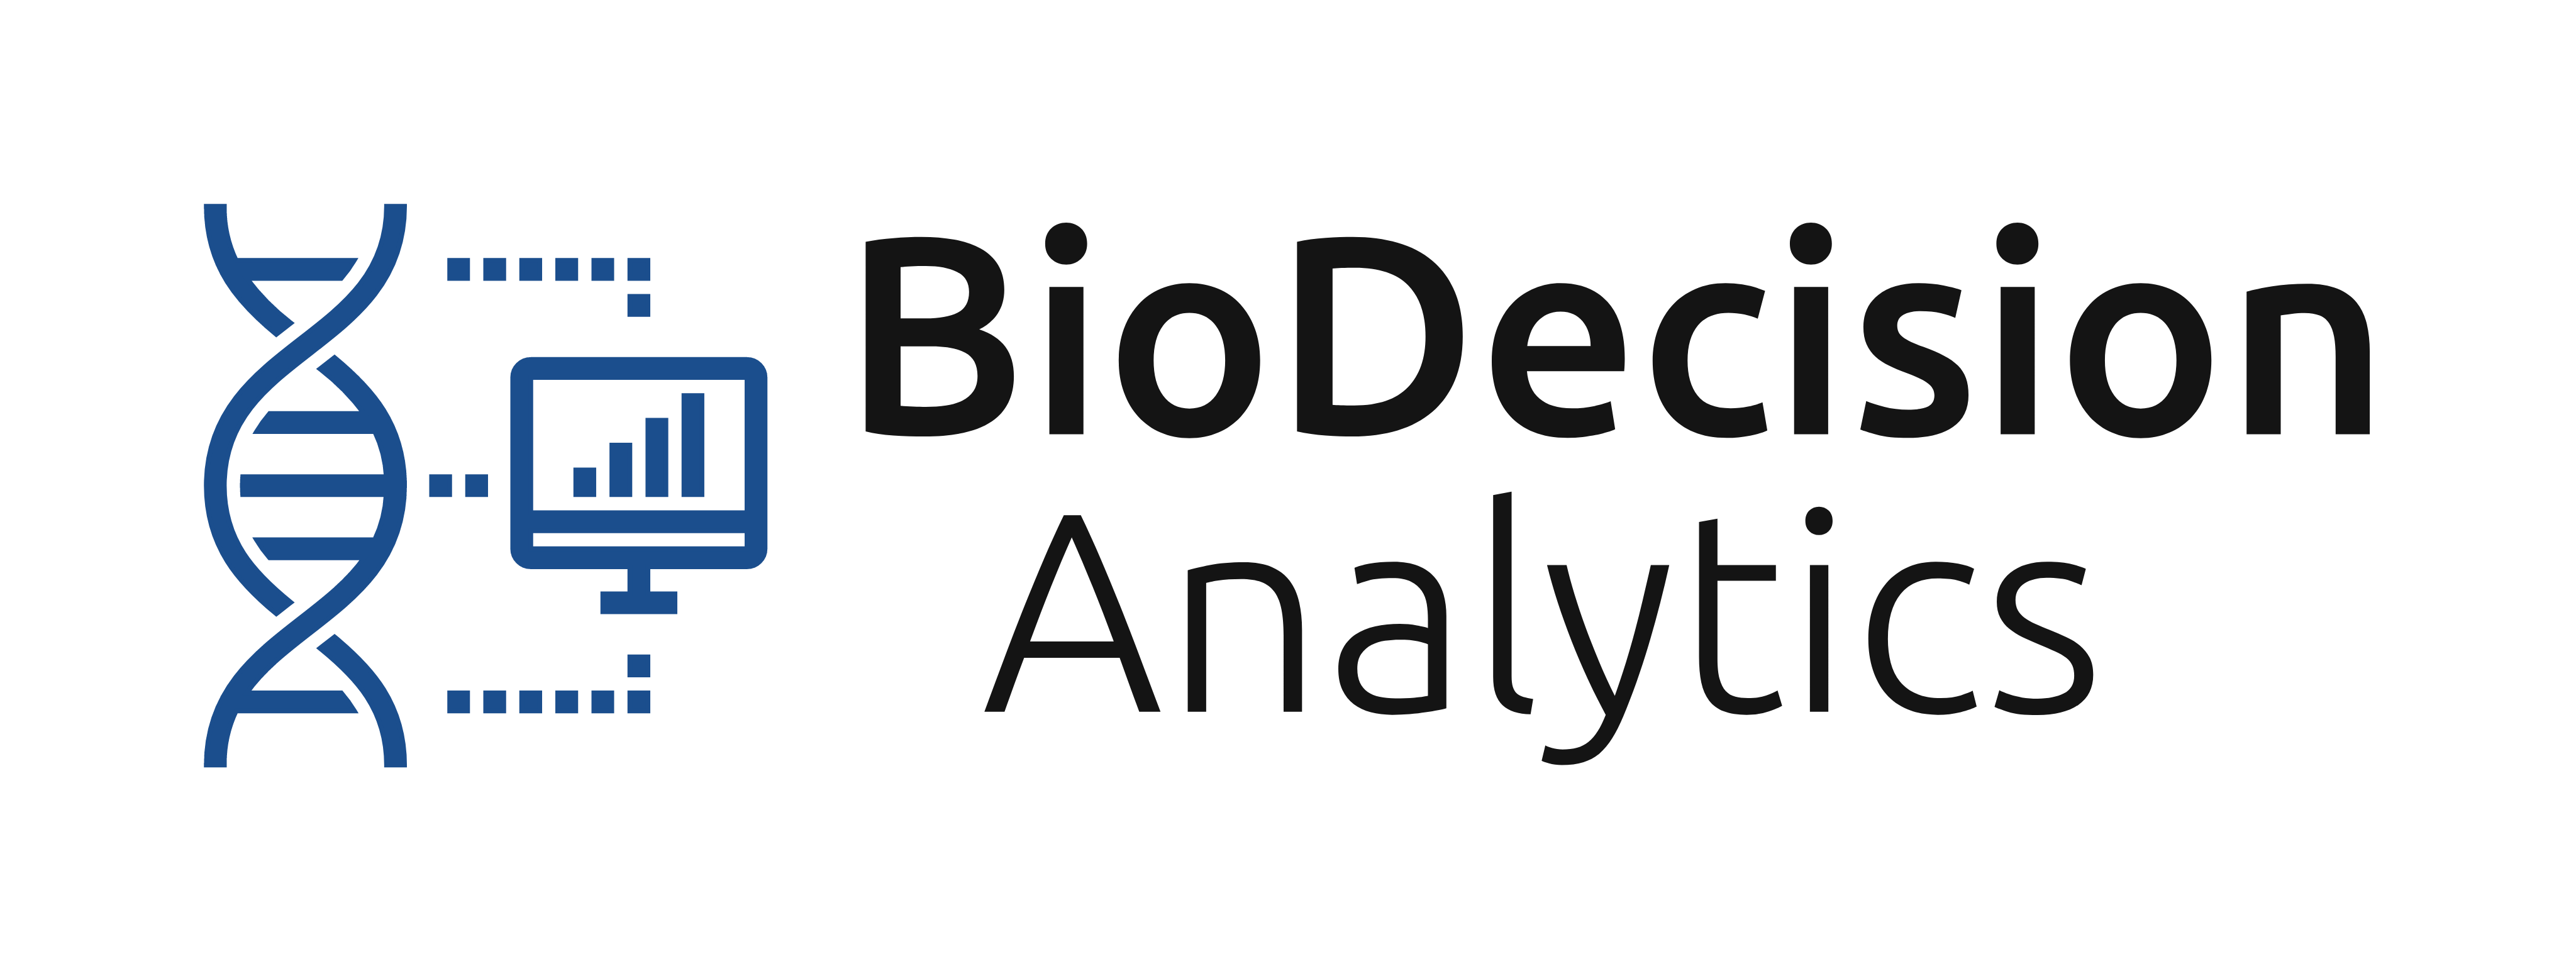 BioDecision Analytics logotipo